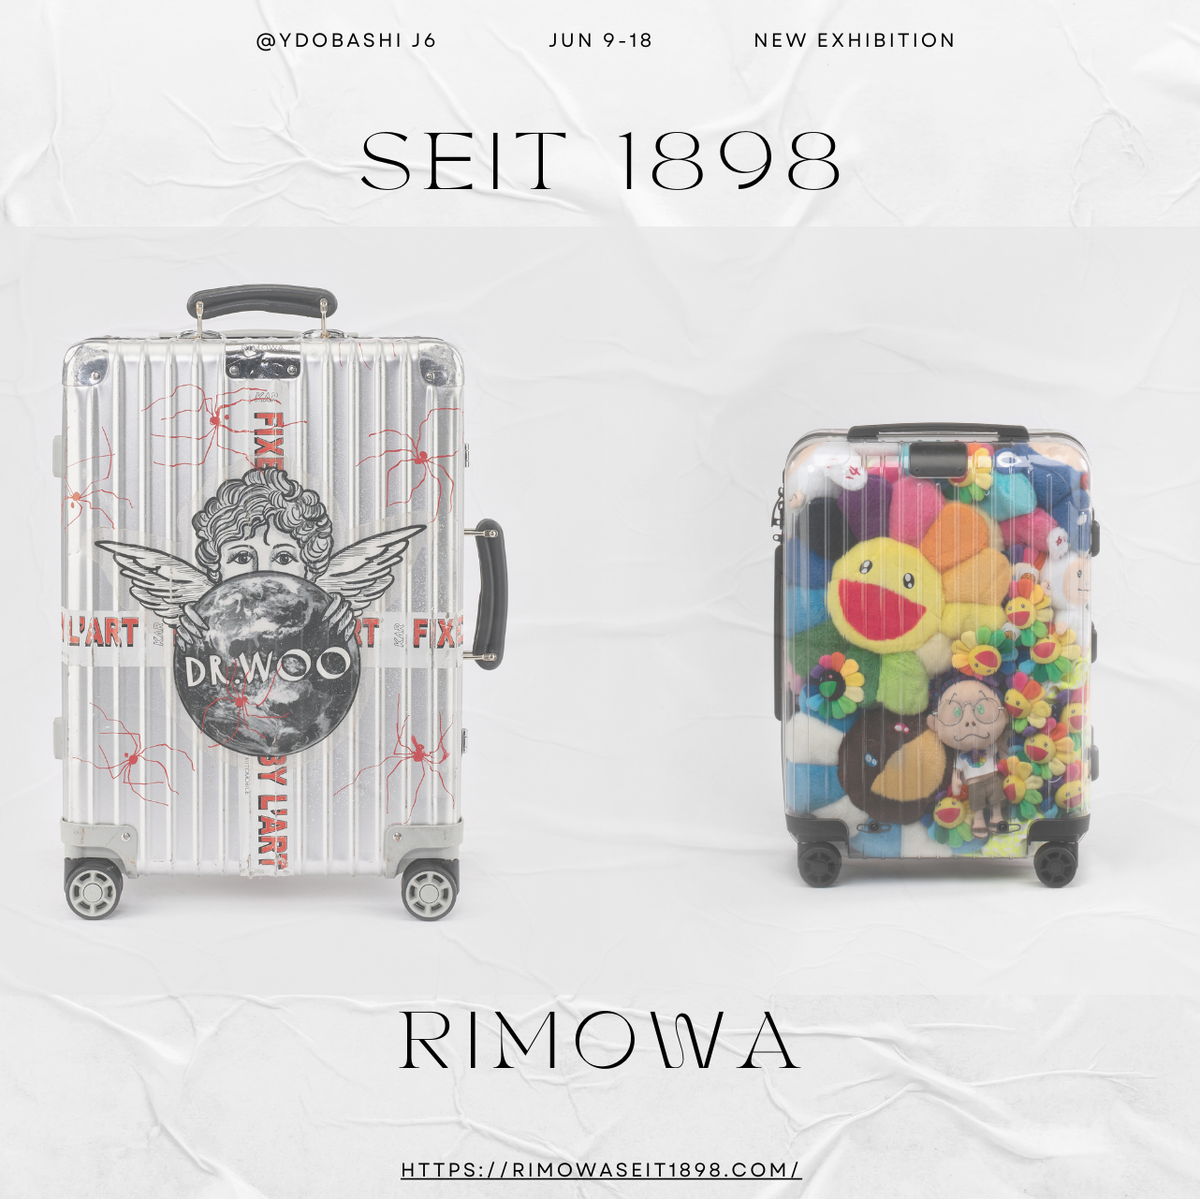 rimowa】リモアスーツケース・アルミバック型・店舗用看板・非売品